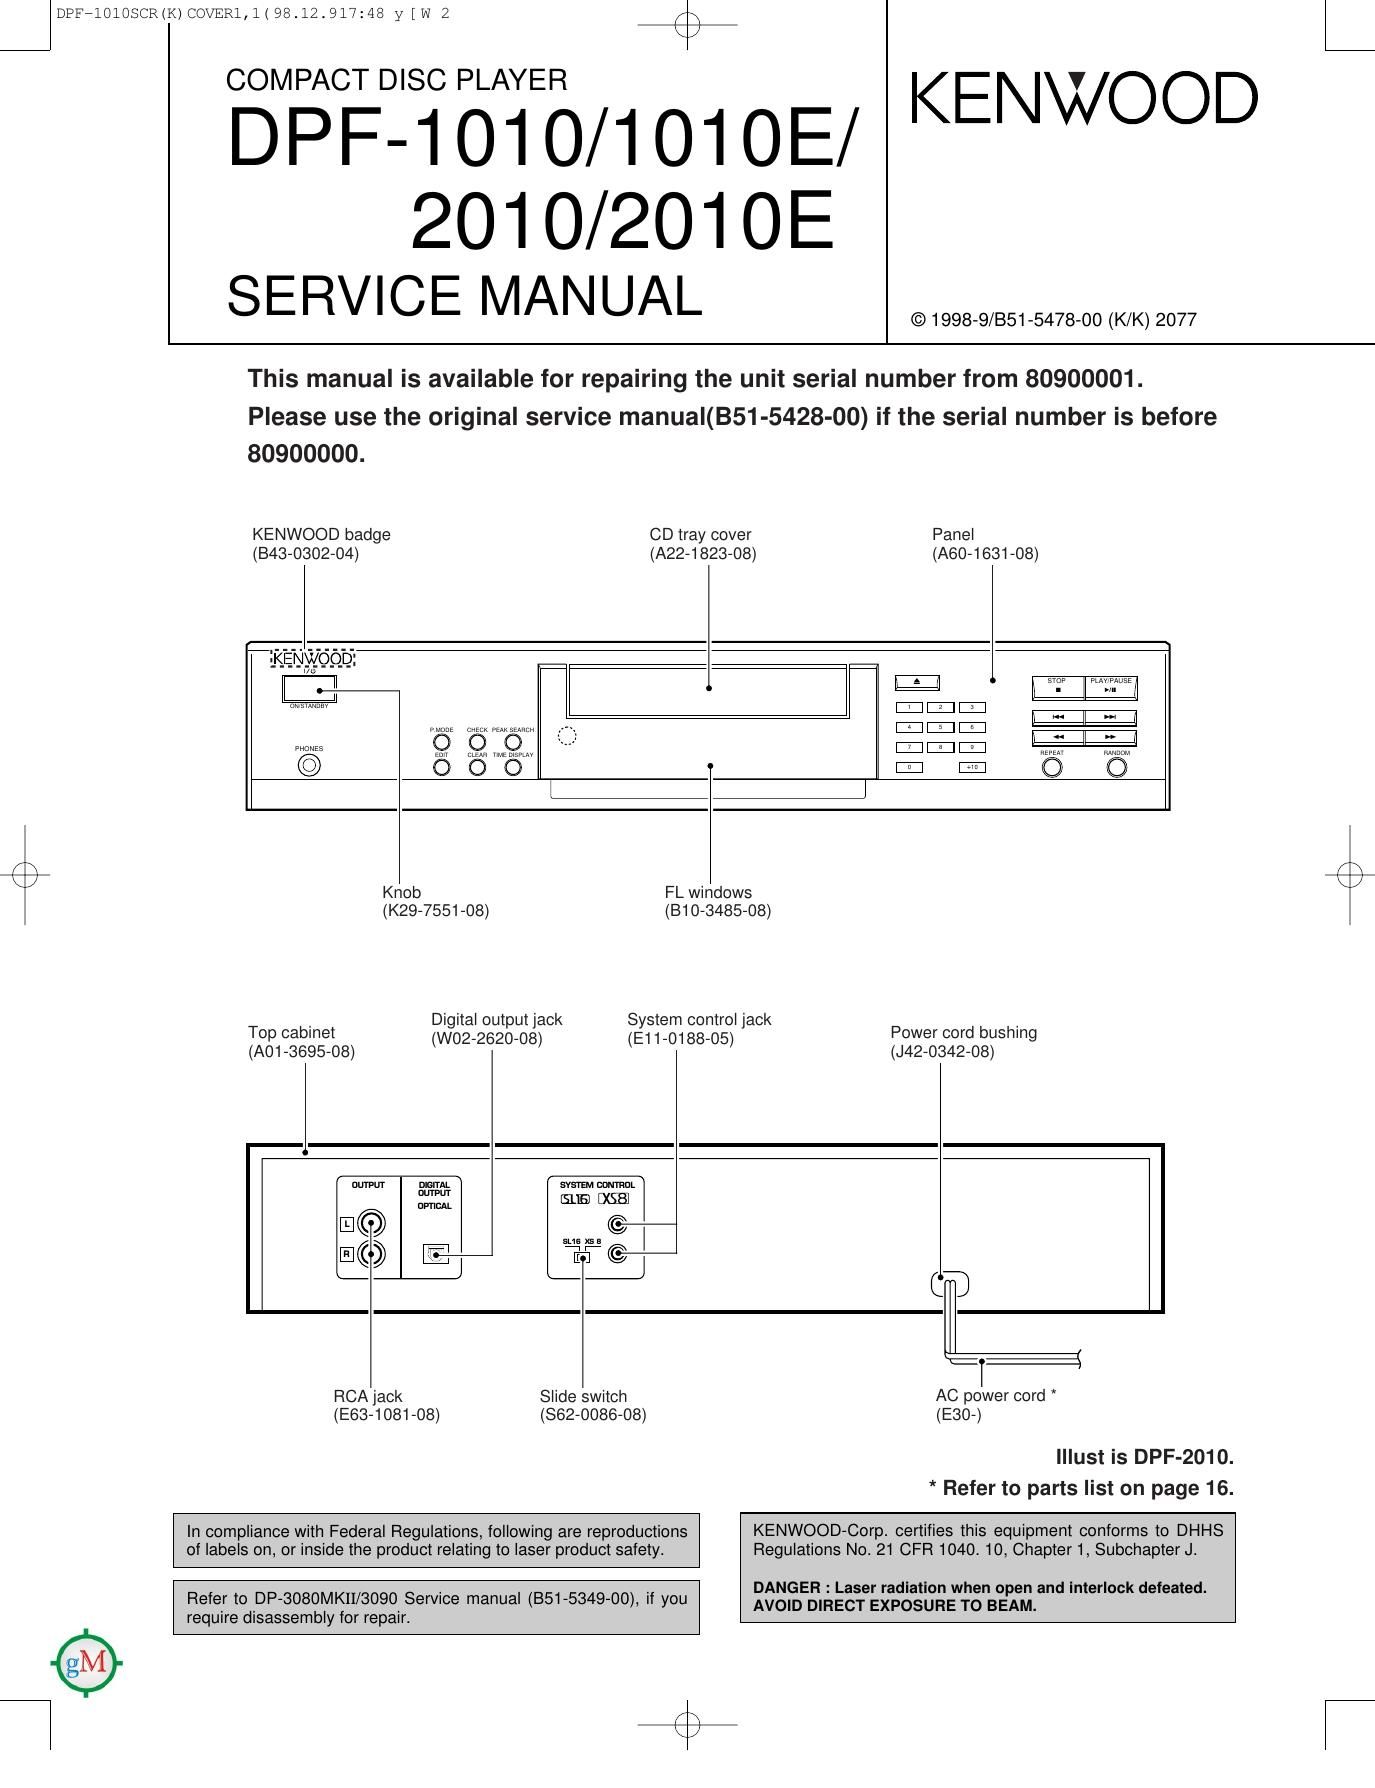 Kenwood DPF 1010 Service Manual